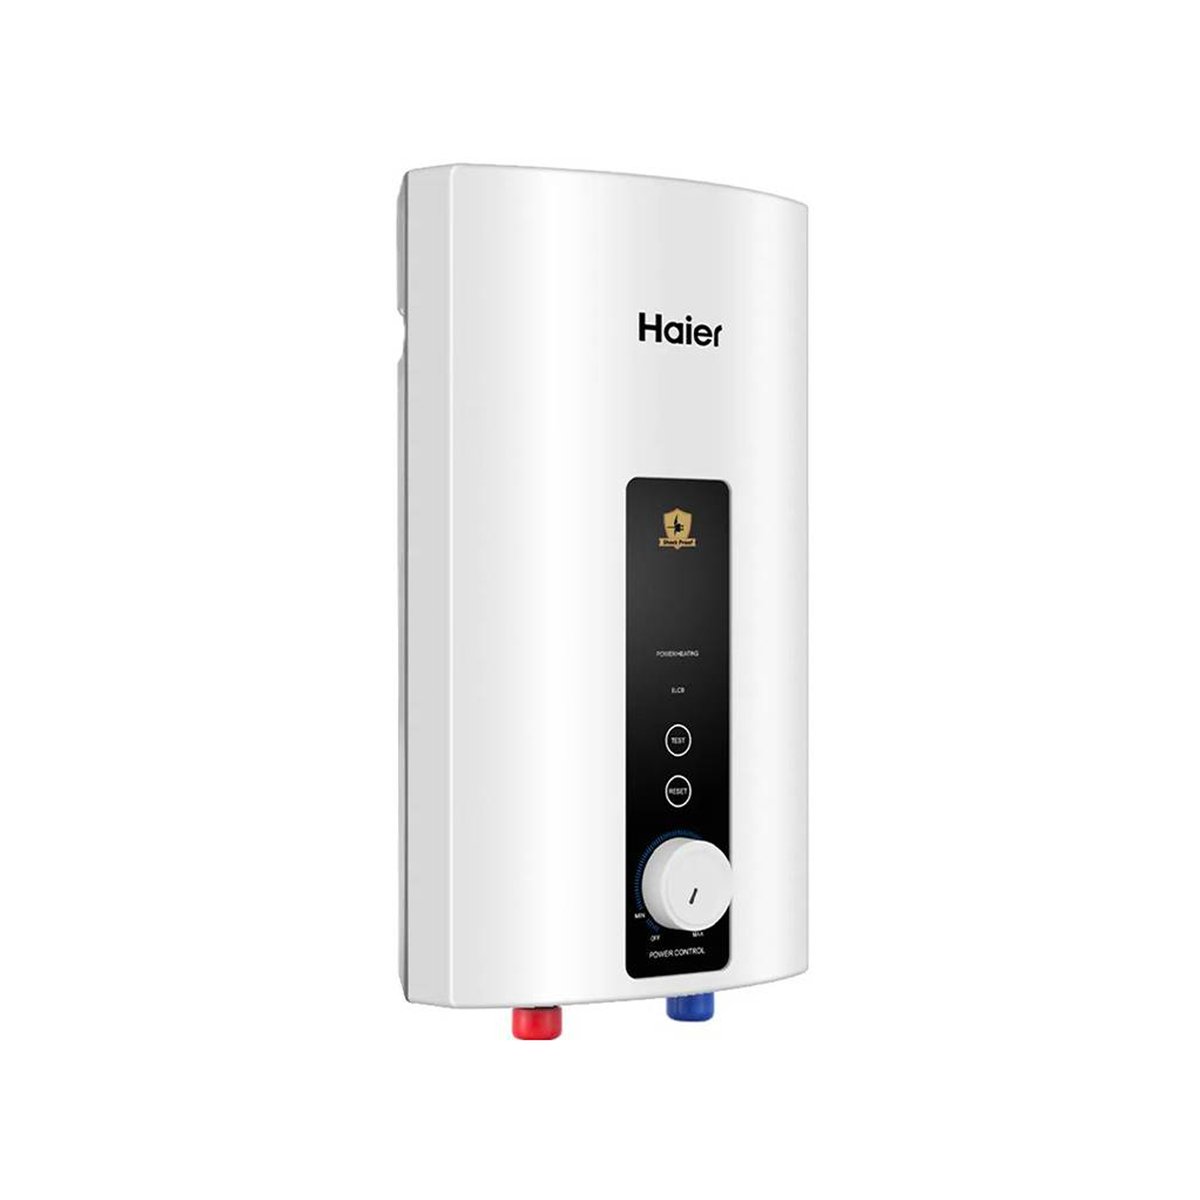 Haier Water Heater EI39HPM White